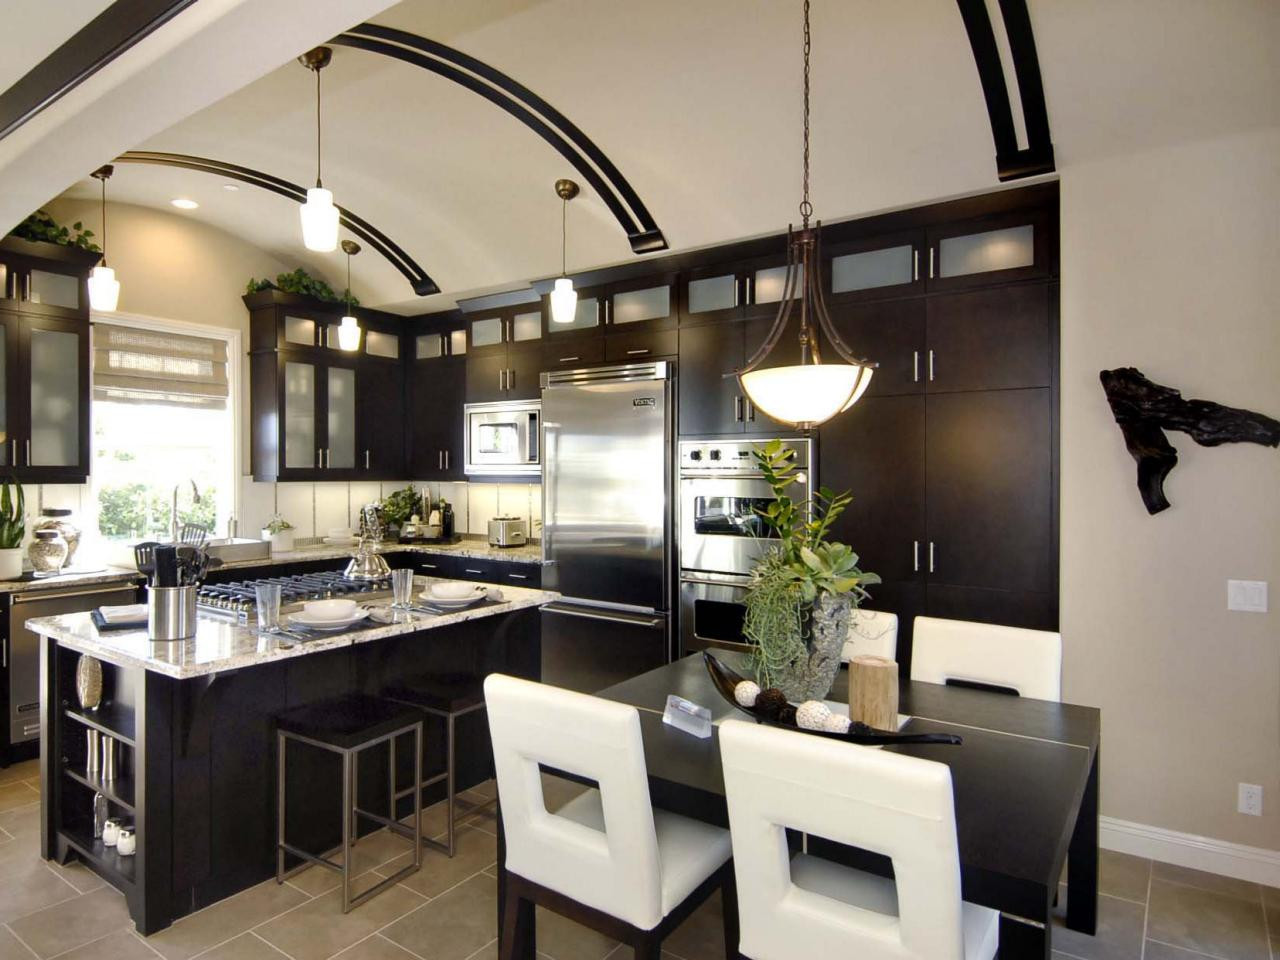 Kitchen Remodeling Layout
 25 Most Popular Kitchen Layout Design Ideas Decoration Love